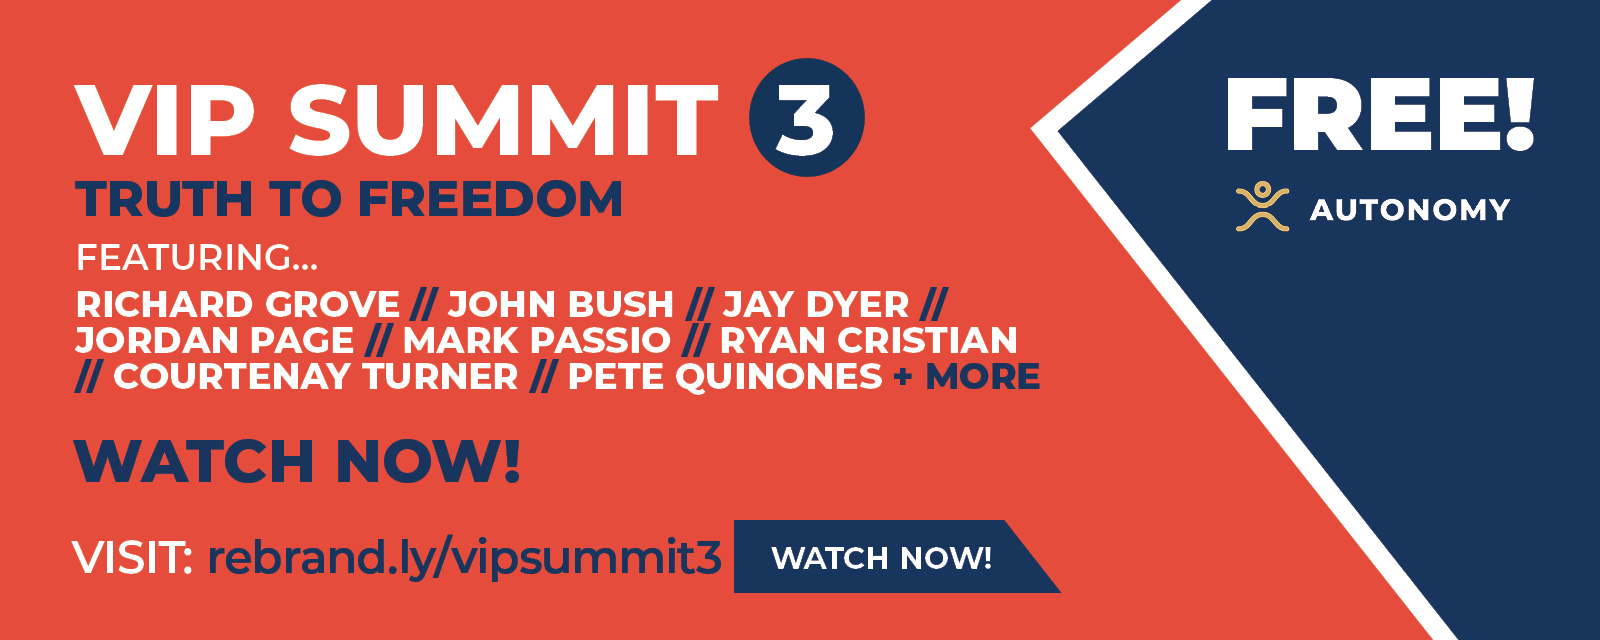 Autonomy | VIP Summit 3: Truth to Freedom